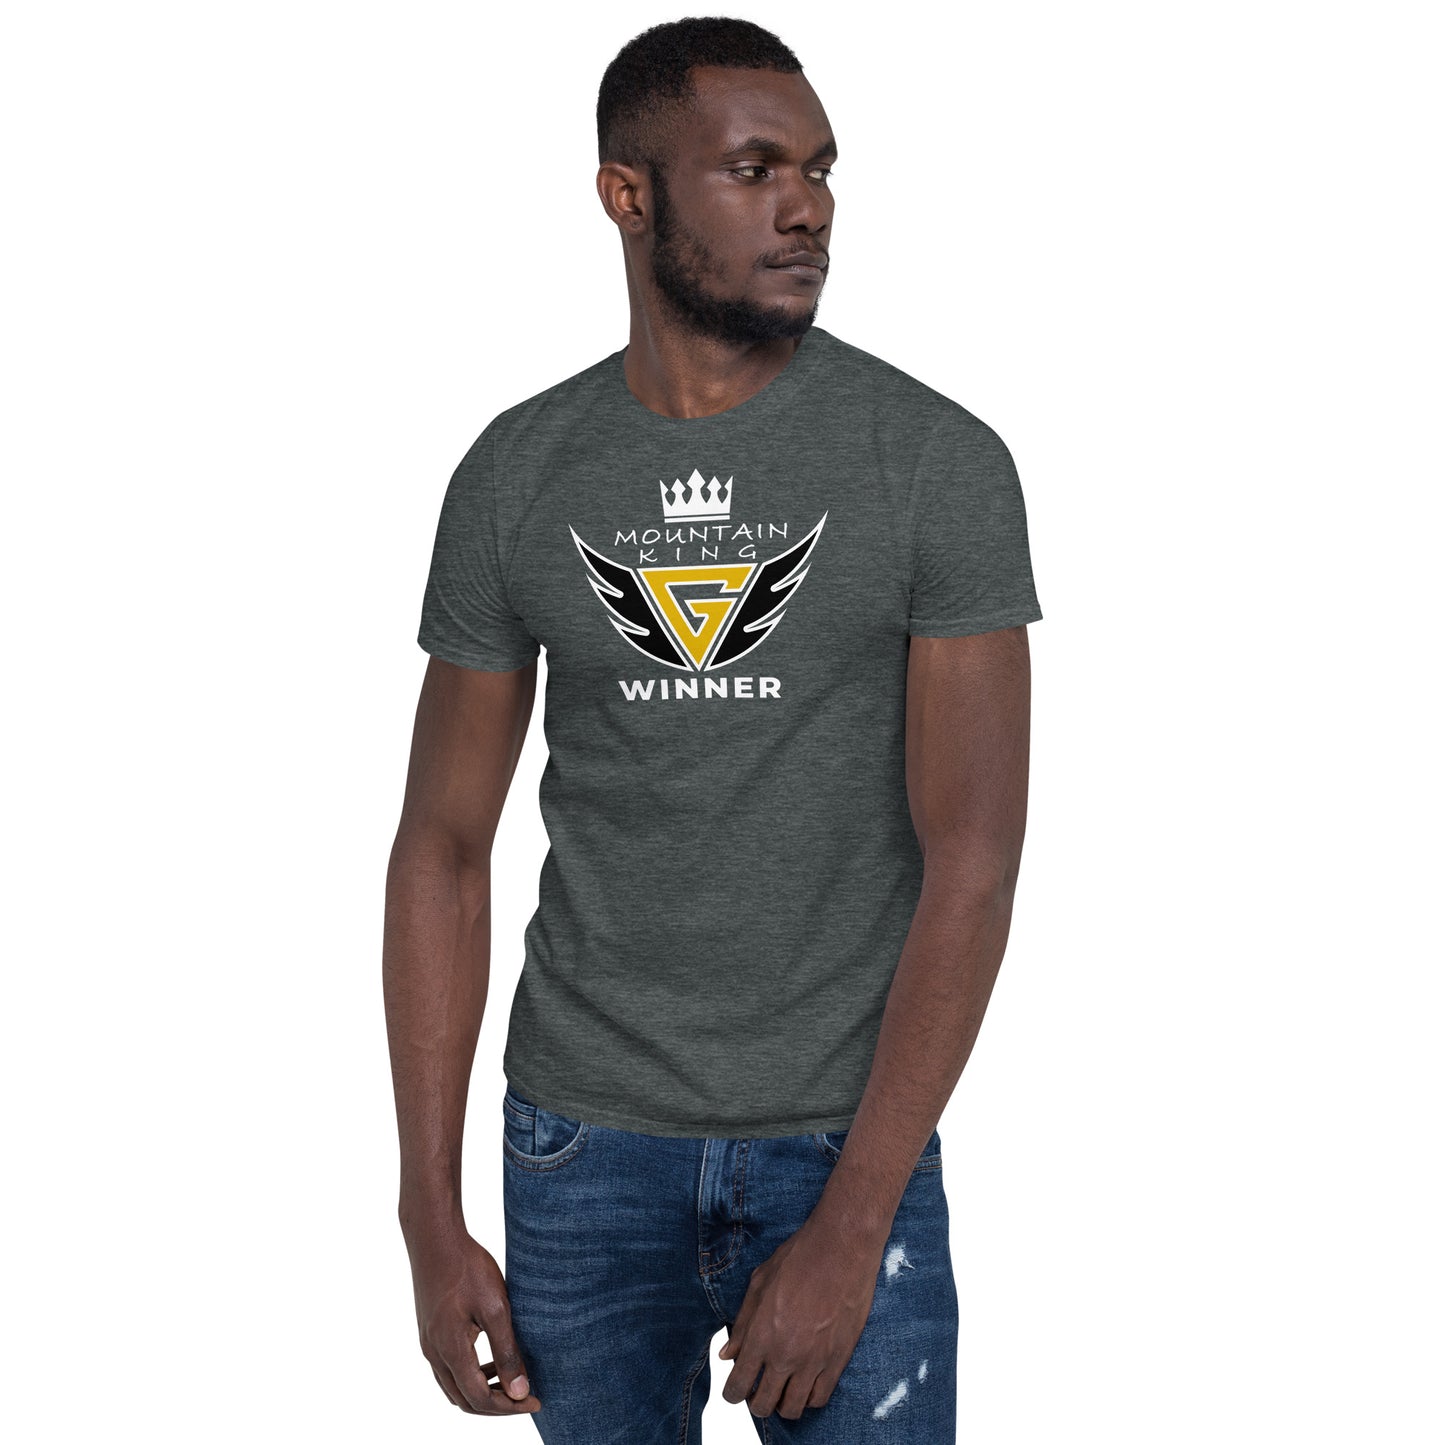 Exclusive Mountain King Winner GUTLESS T-Shirt